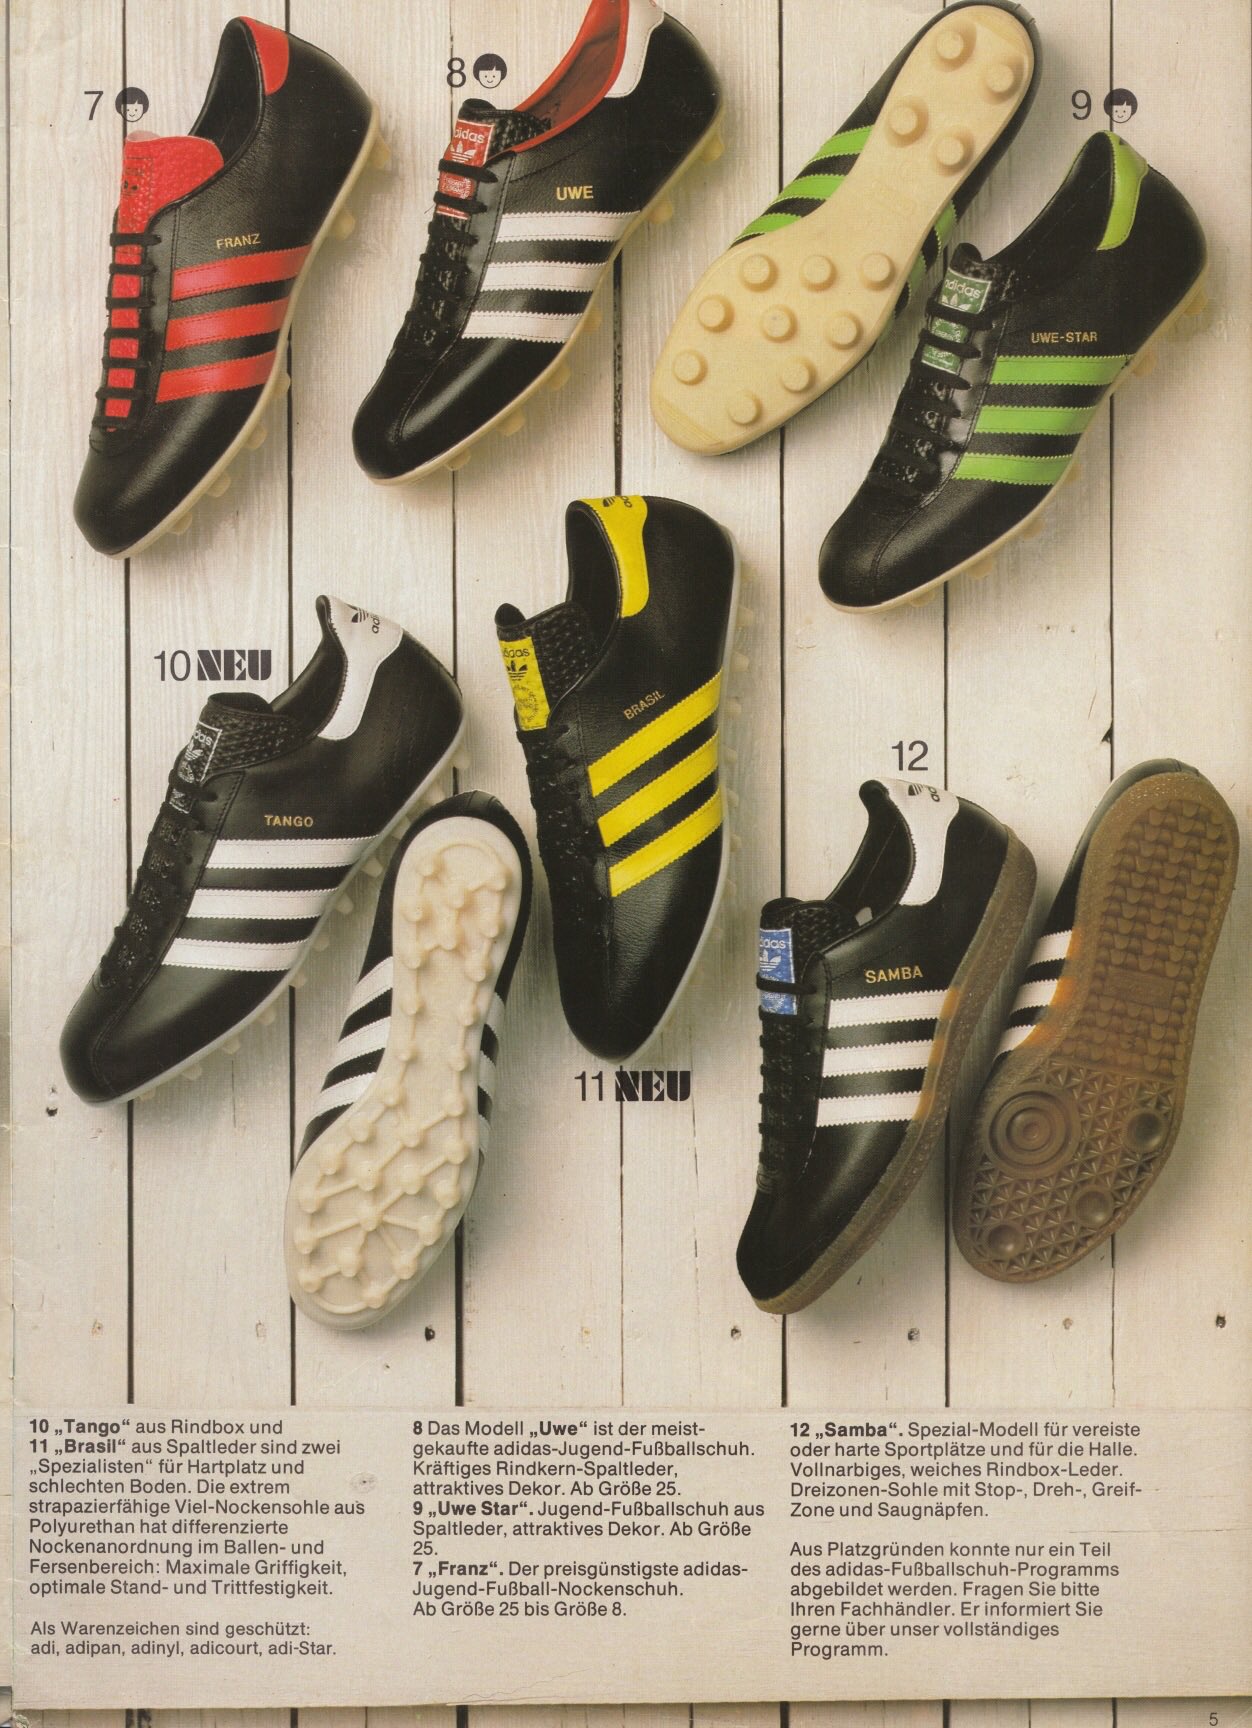 The Glove Bag on Twitter: "1979 @adidasfootball @adidasUK @adidas Catalogue  Pages https://t.co/eG4zxTmchv" / Twitter